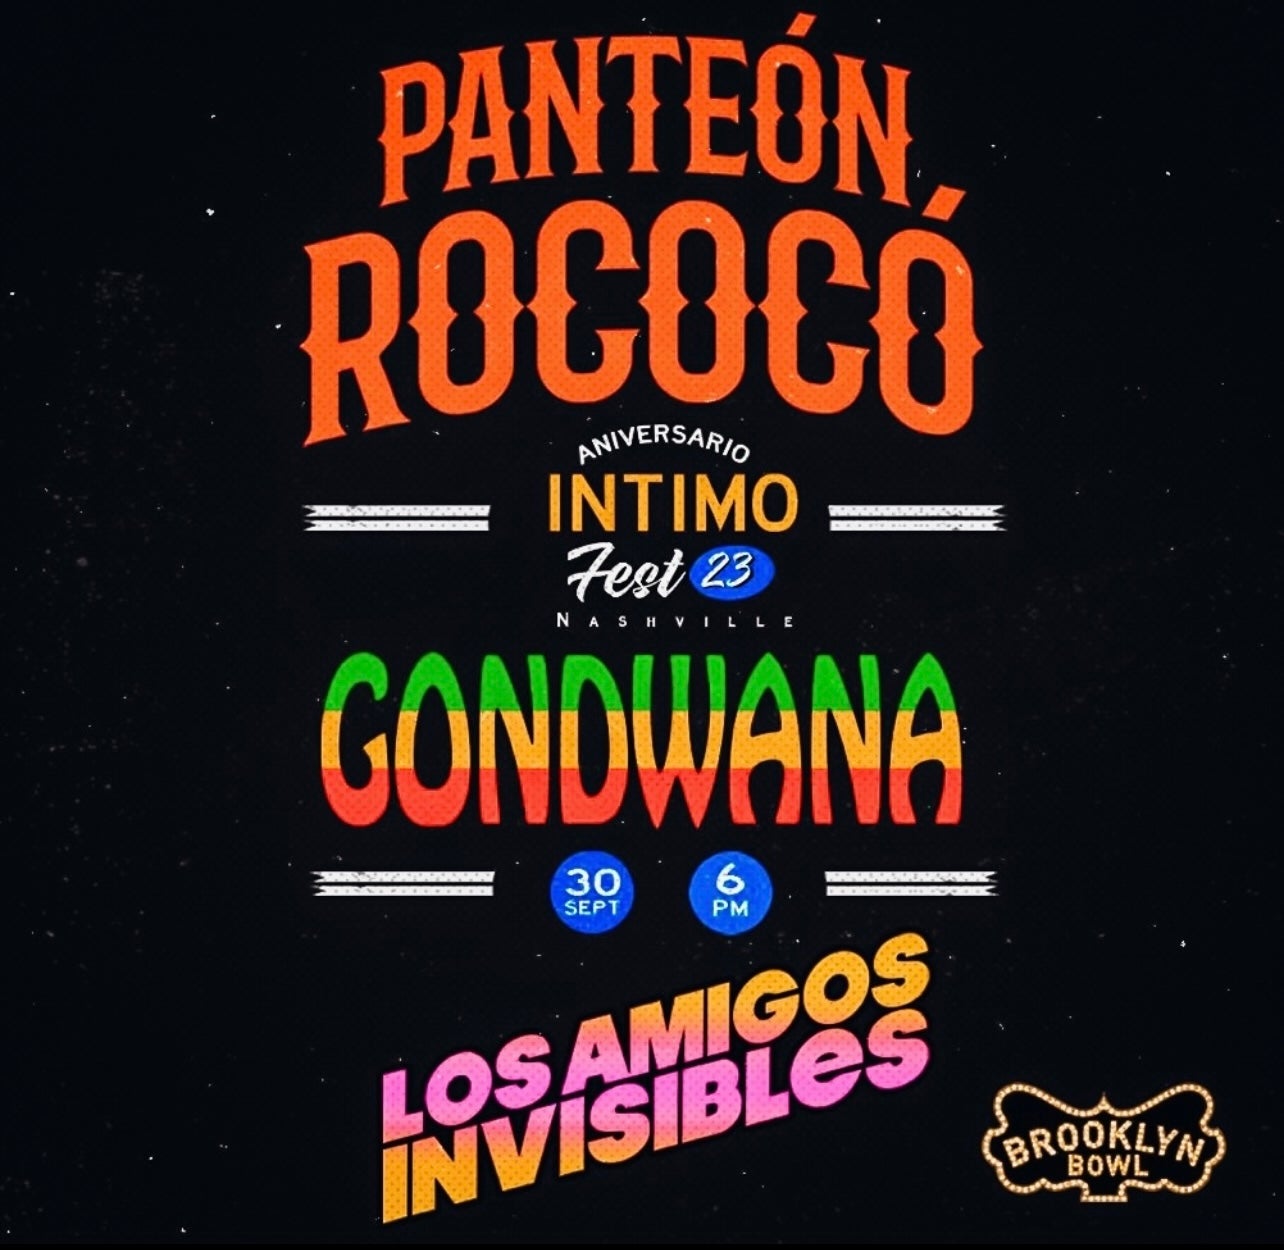 Intimo Fest ft. Panteón Rococó, Los Amigos Invisibles and Gondwana